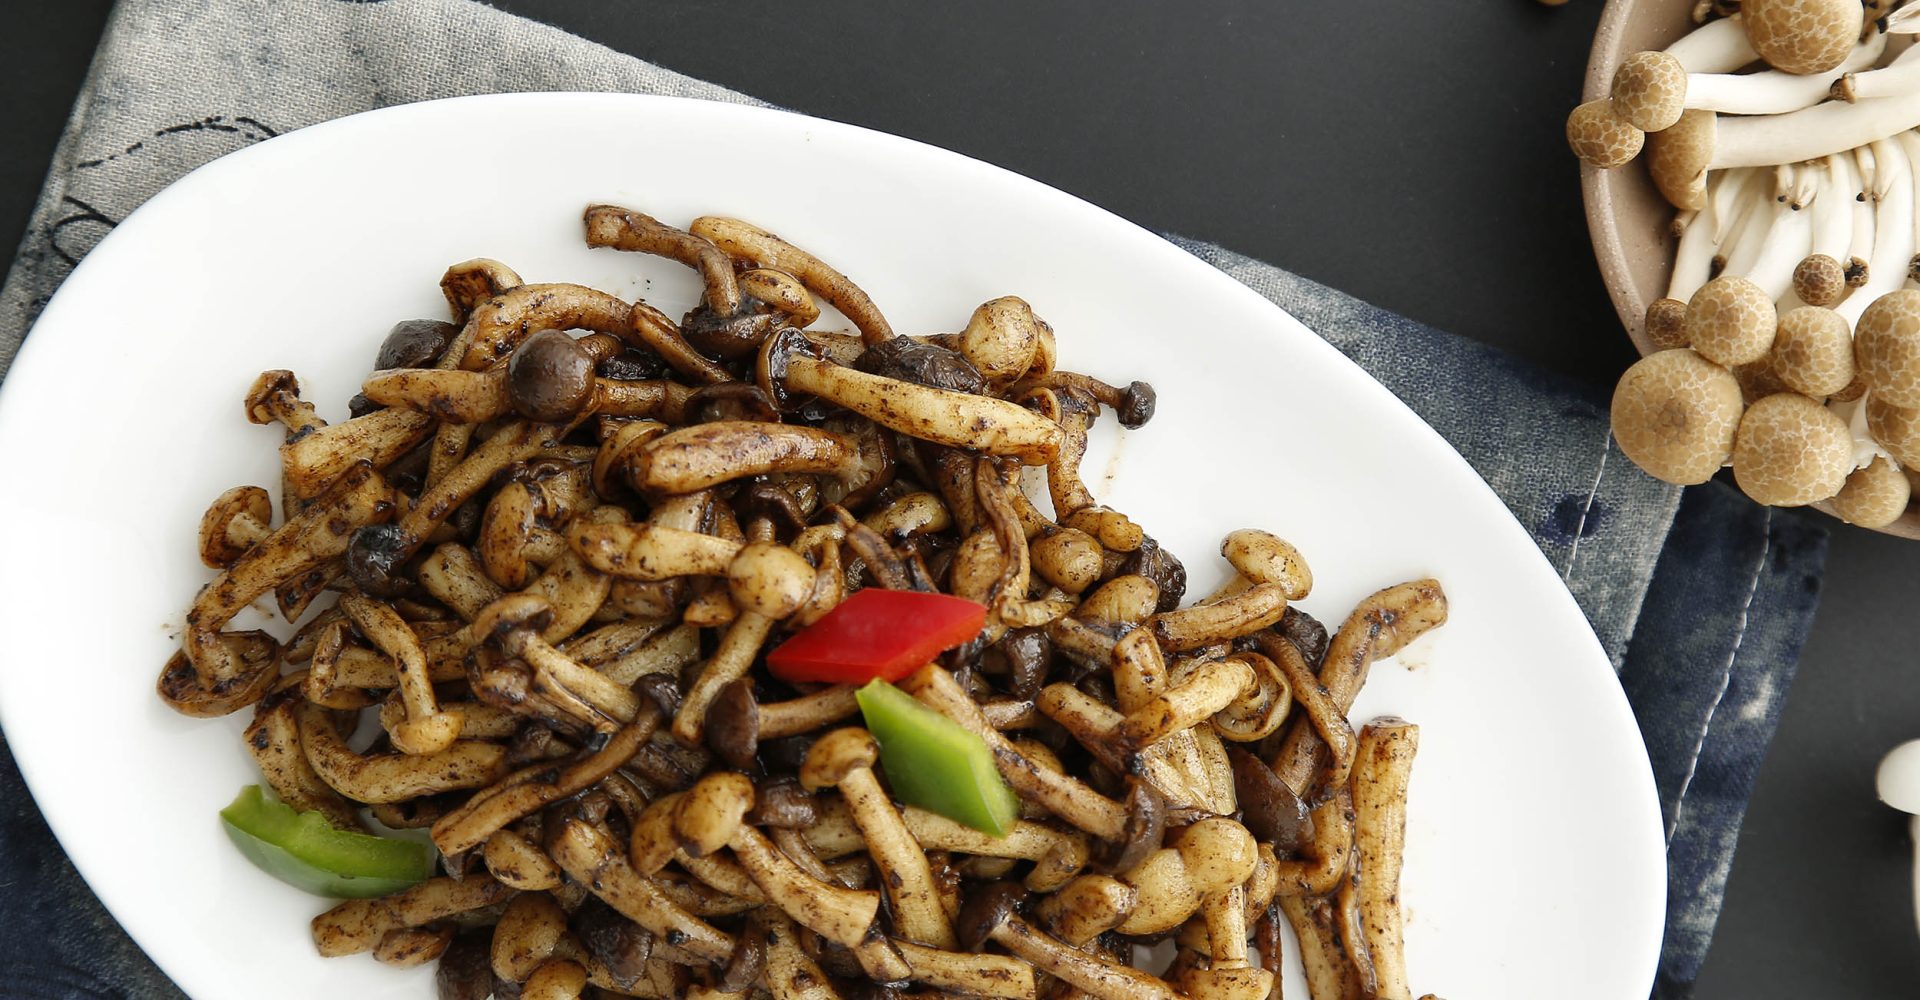 Xiu Healthy dishes - Mixed mushroom with truffle